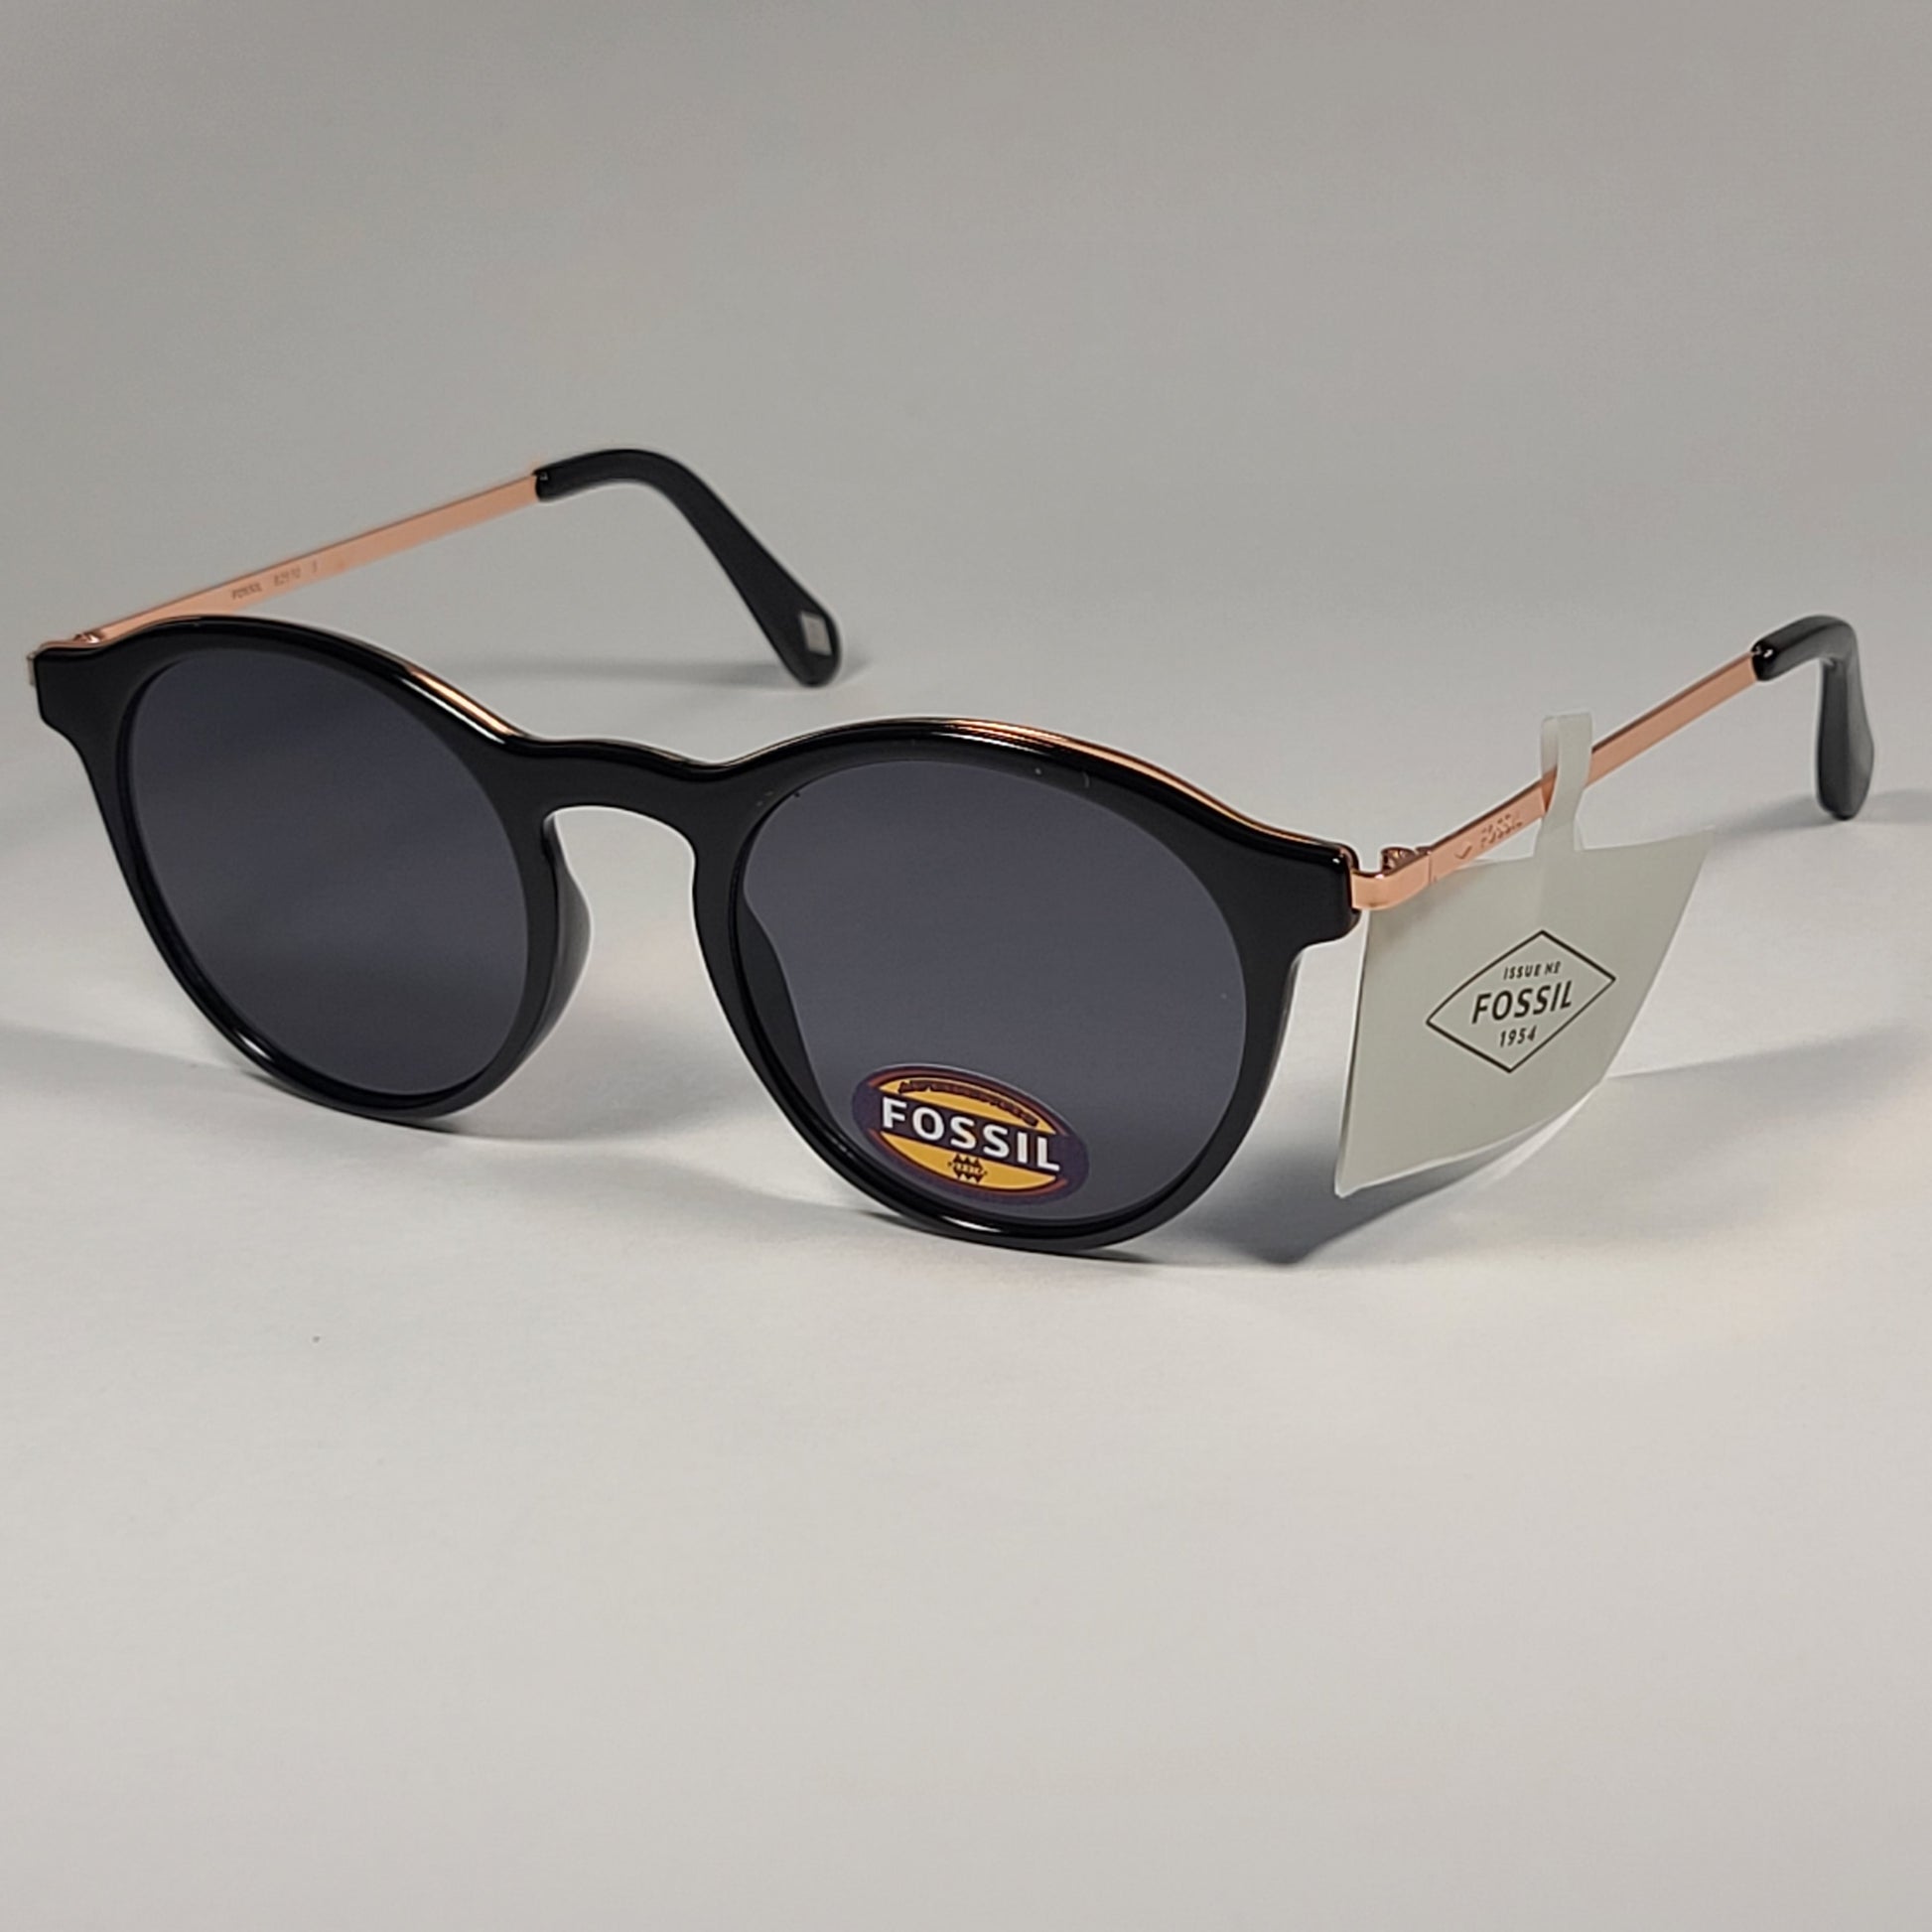 Fossil Round FW190 Women’s Sunglasses Shiny Black Gold Tone Frame Gray Lens - Sunglasses